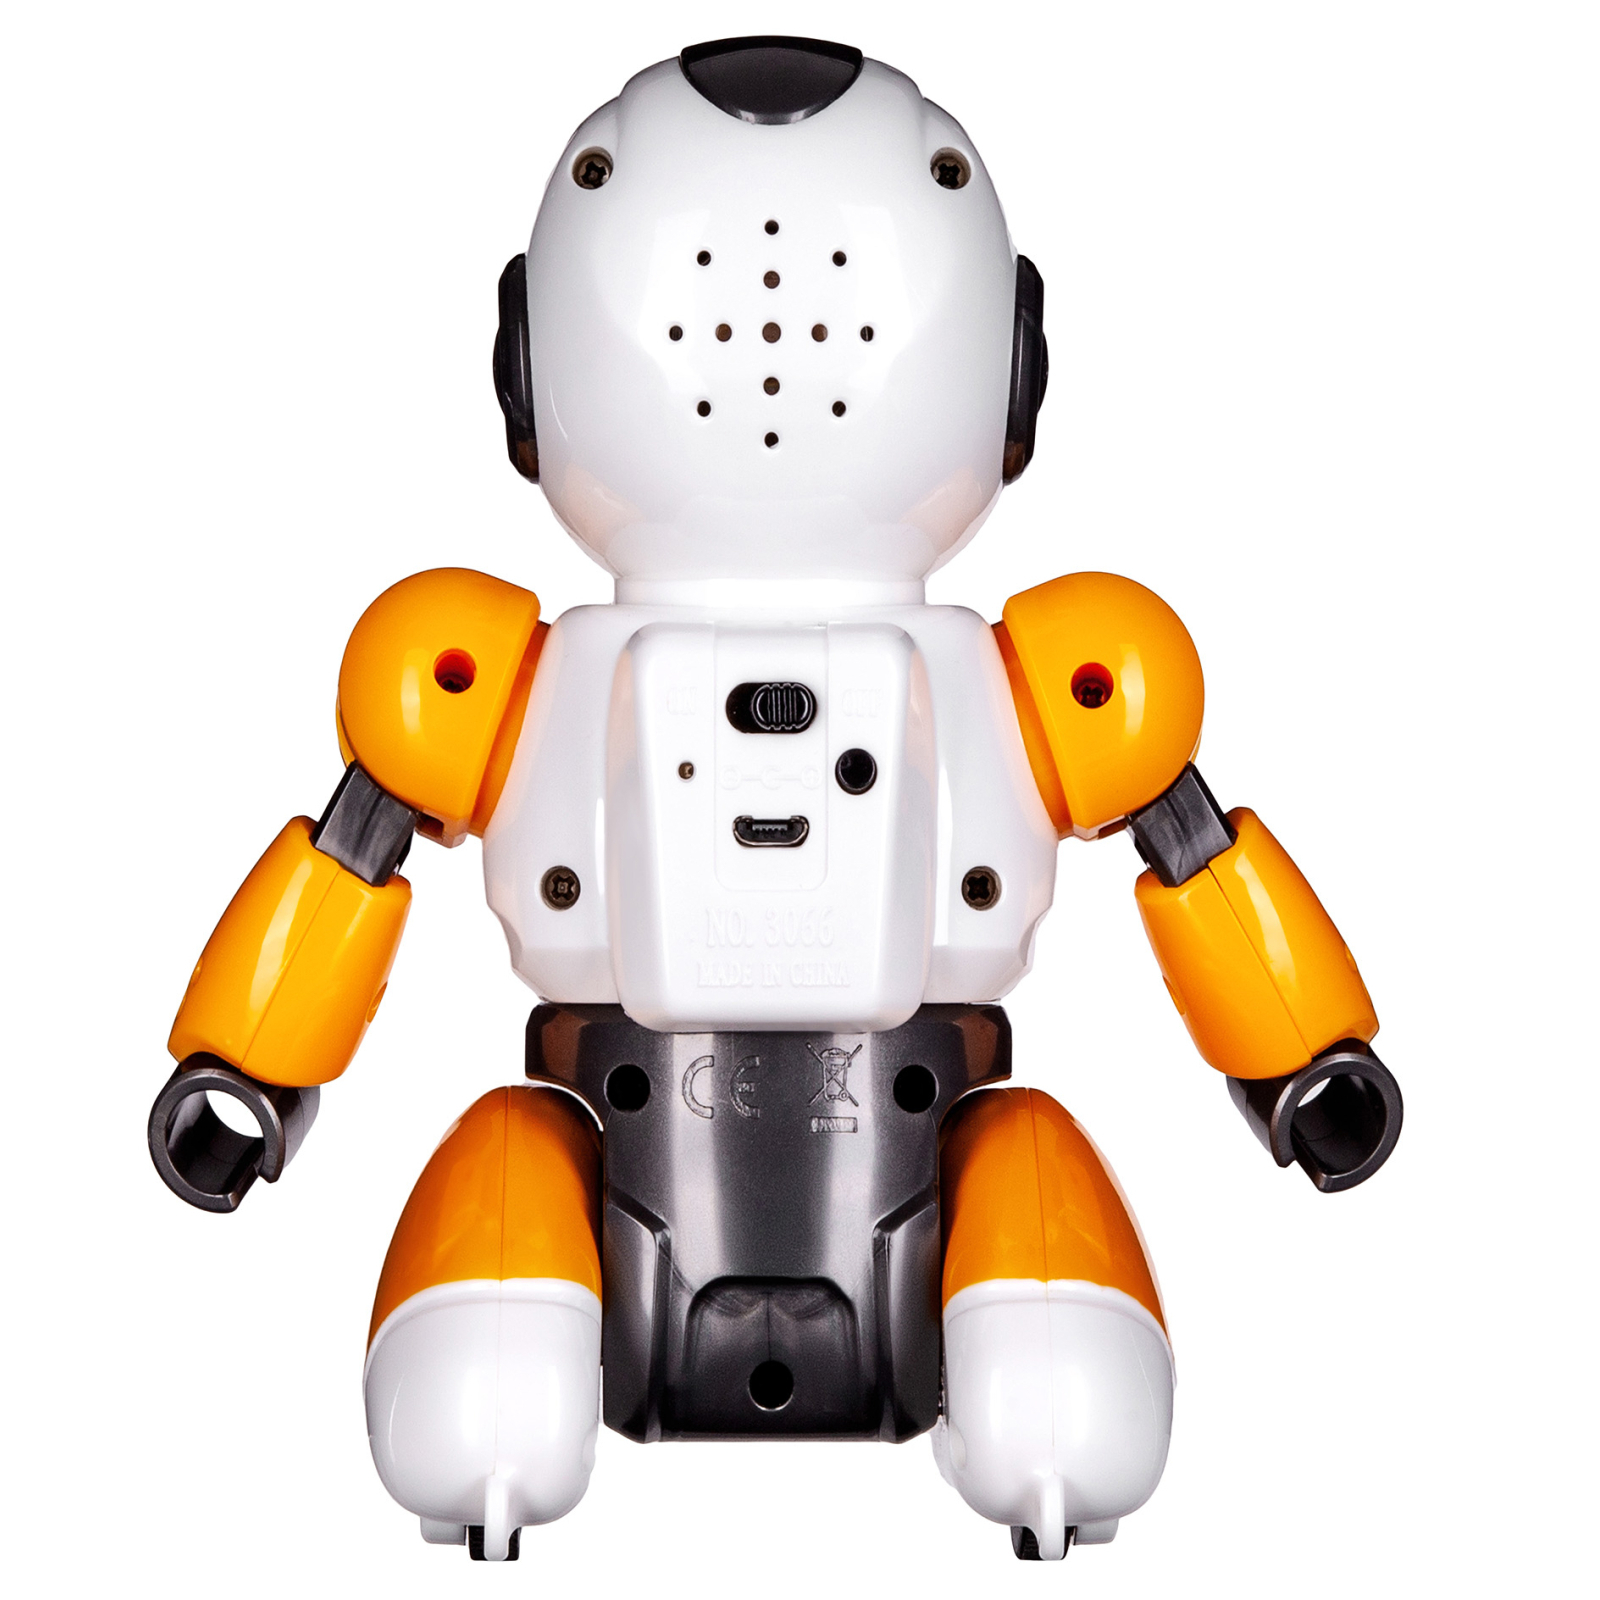 Інтерактивна іграшка Same Toy Робот Форвард (Желтый) на радиоуправлении (3066-CUT-YELLOW) зображення 5